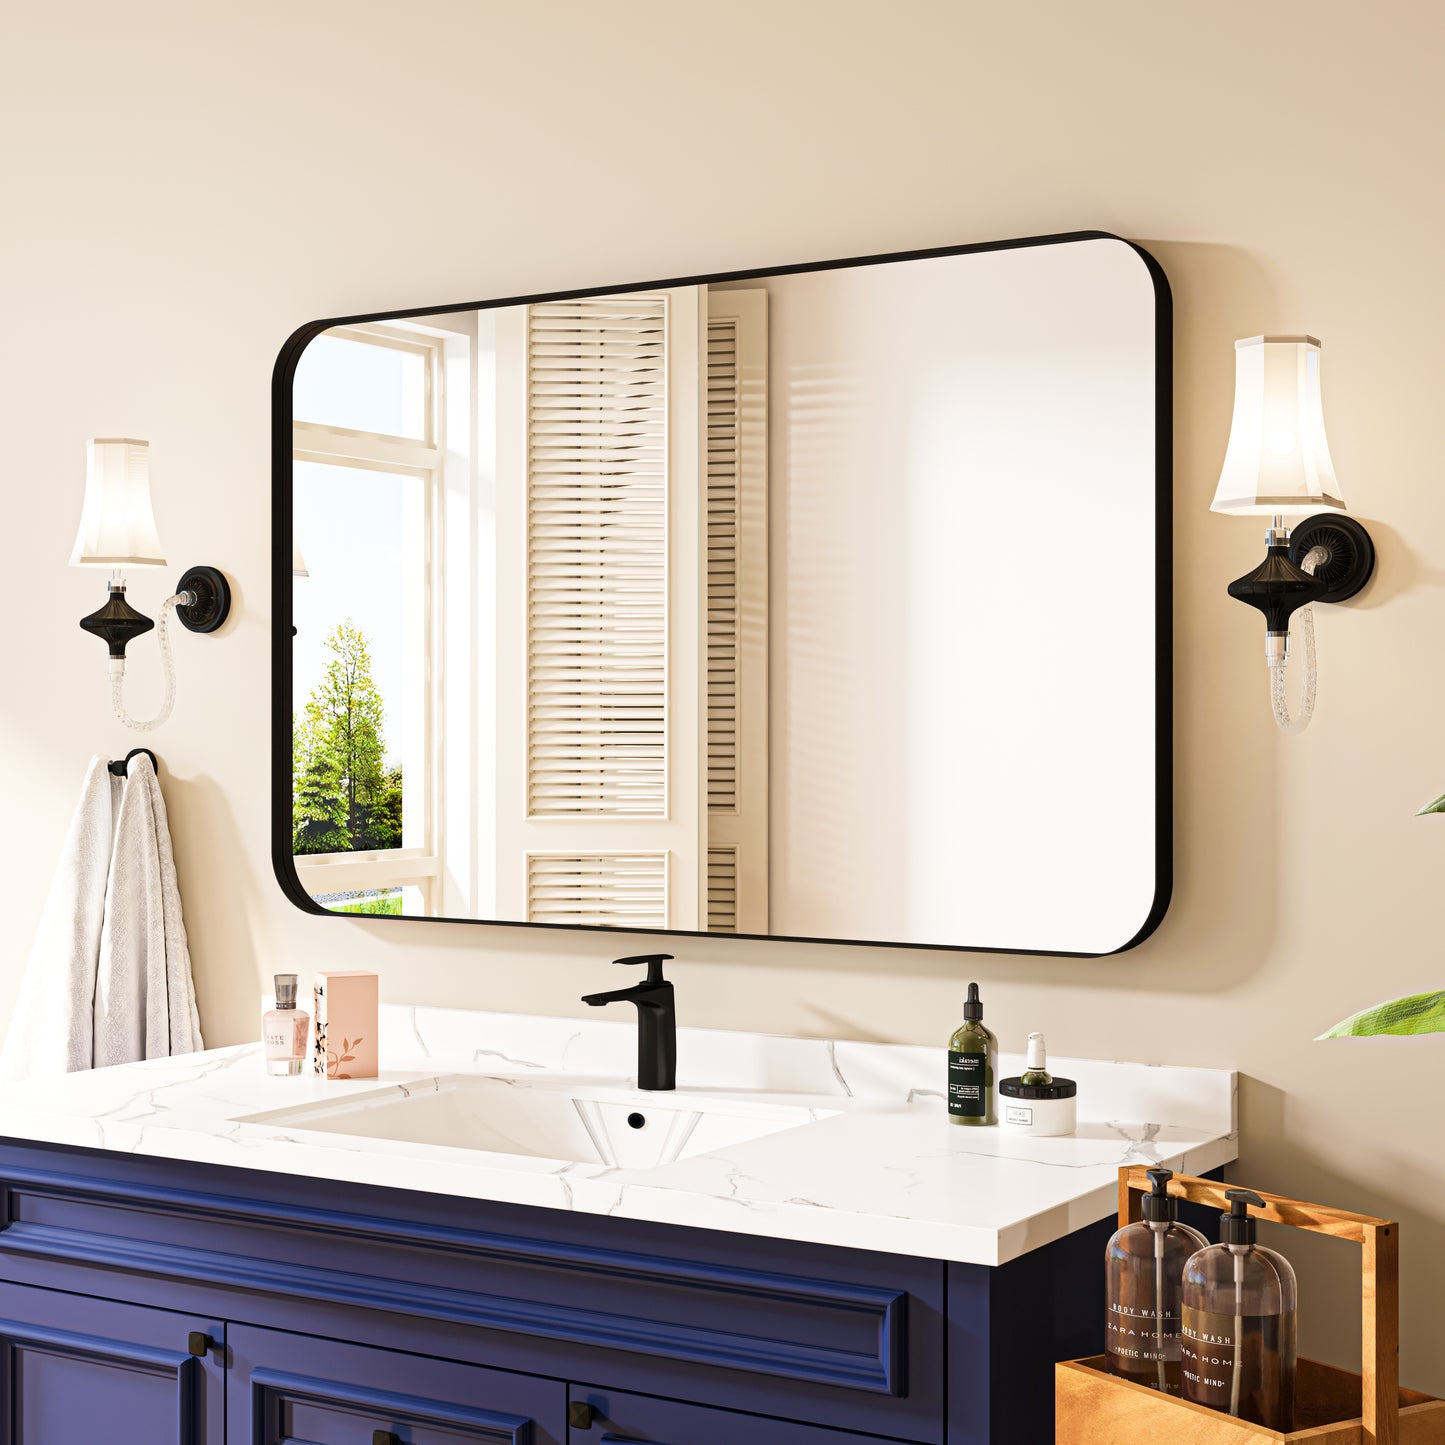 Waterpar® 48 in. W x 30 in. H Rectangular Aluminum Framed Wall Bathroom Vanity Mirror